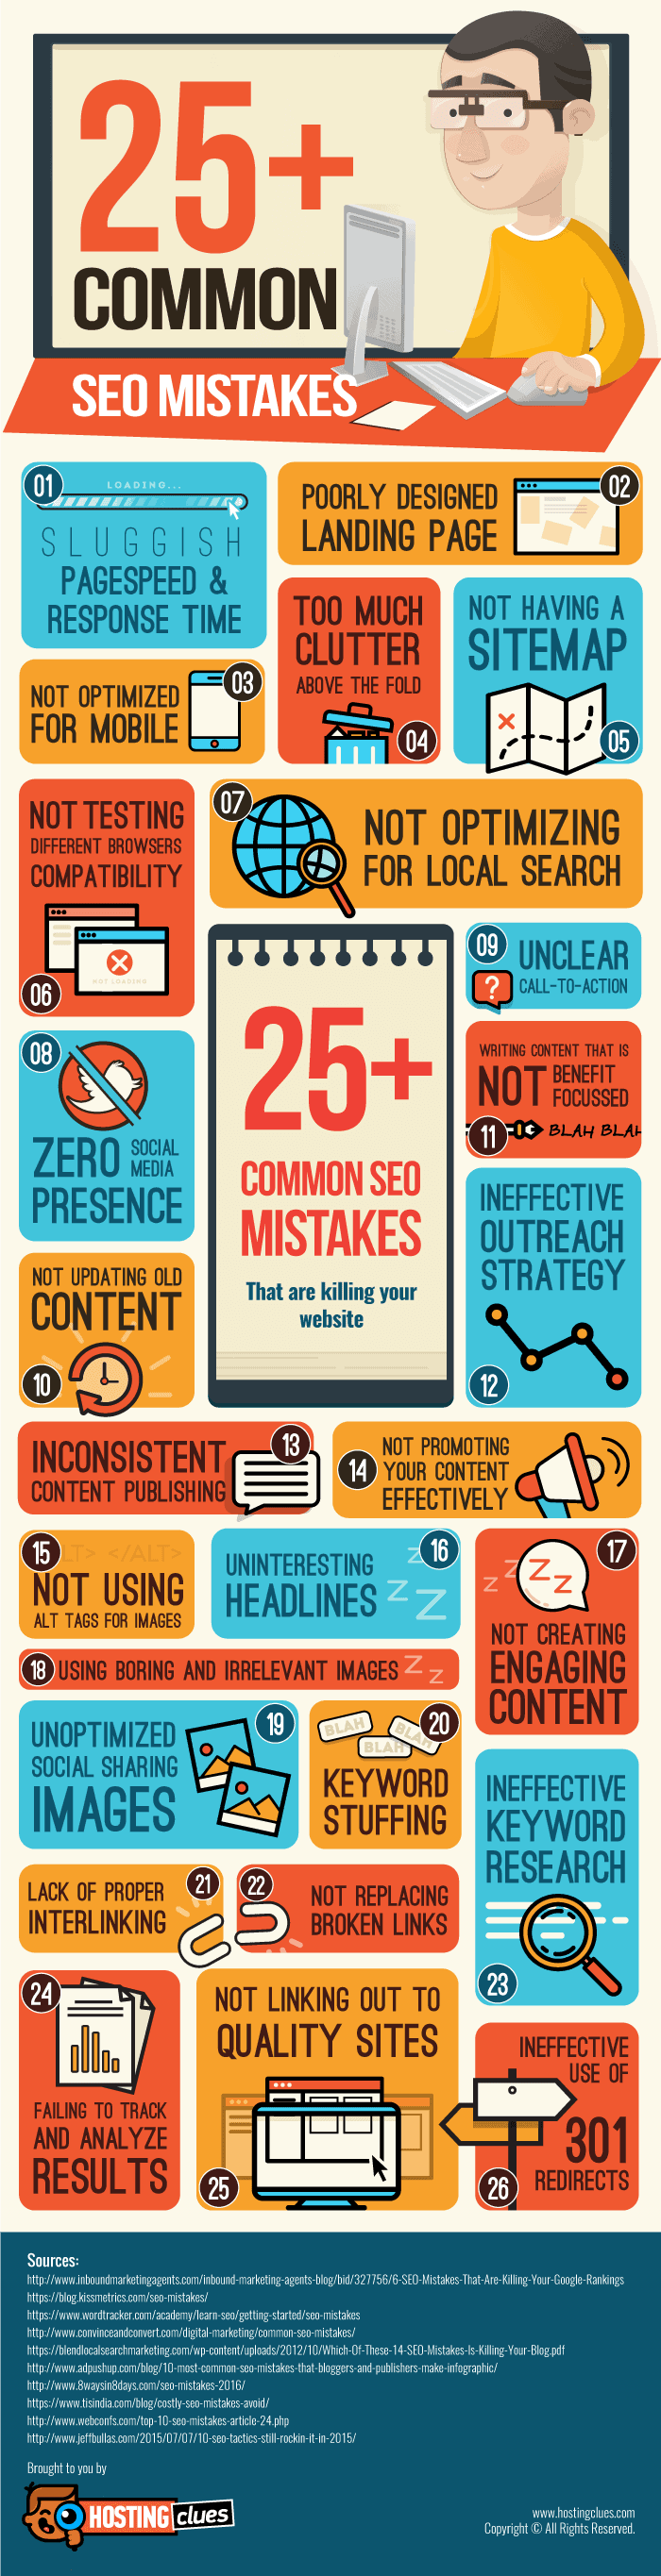 25+ Common SEO Mistakes [Infographic]